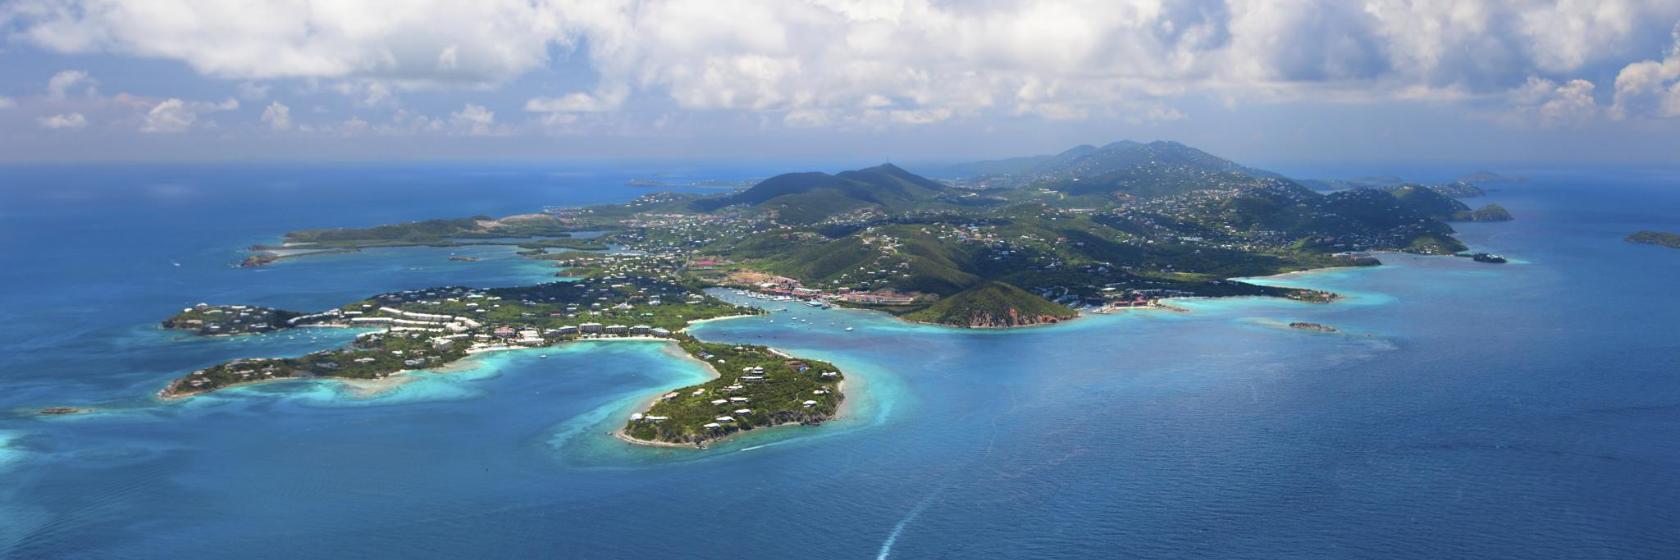 The 10 Best Saint Thomas Hotels - Where To Stay on Saint Thomas, U.S.  Virgin Islands